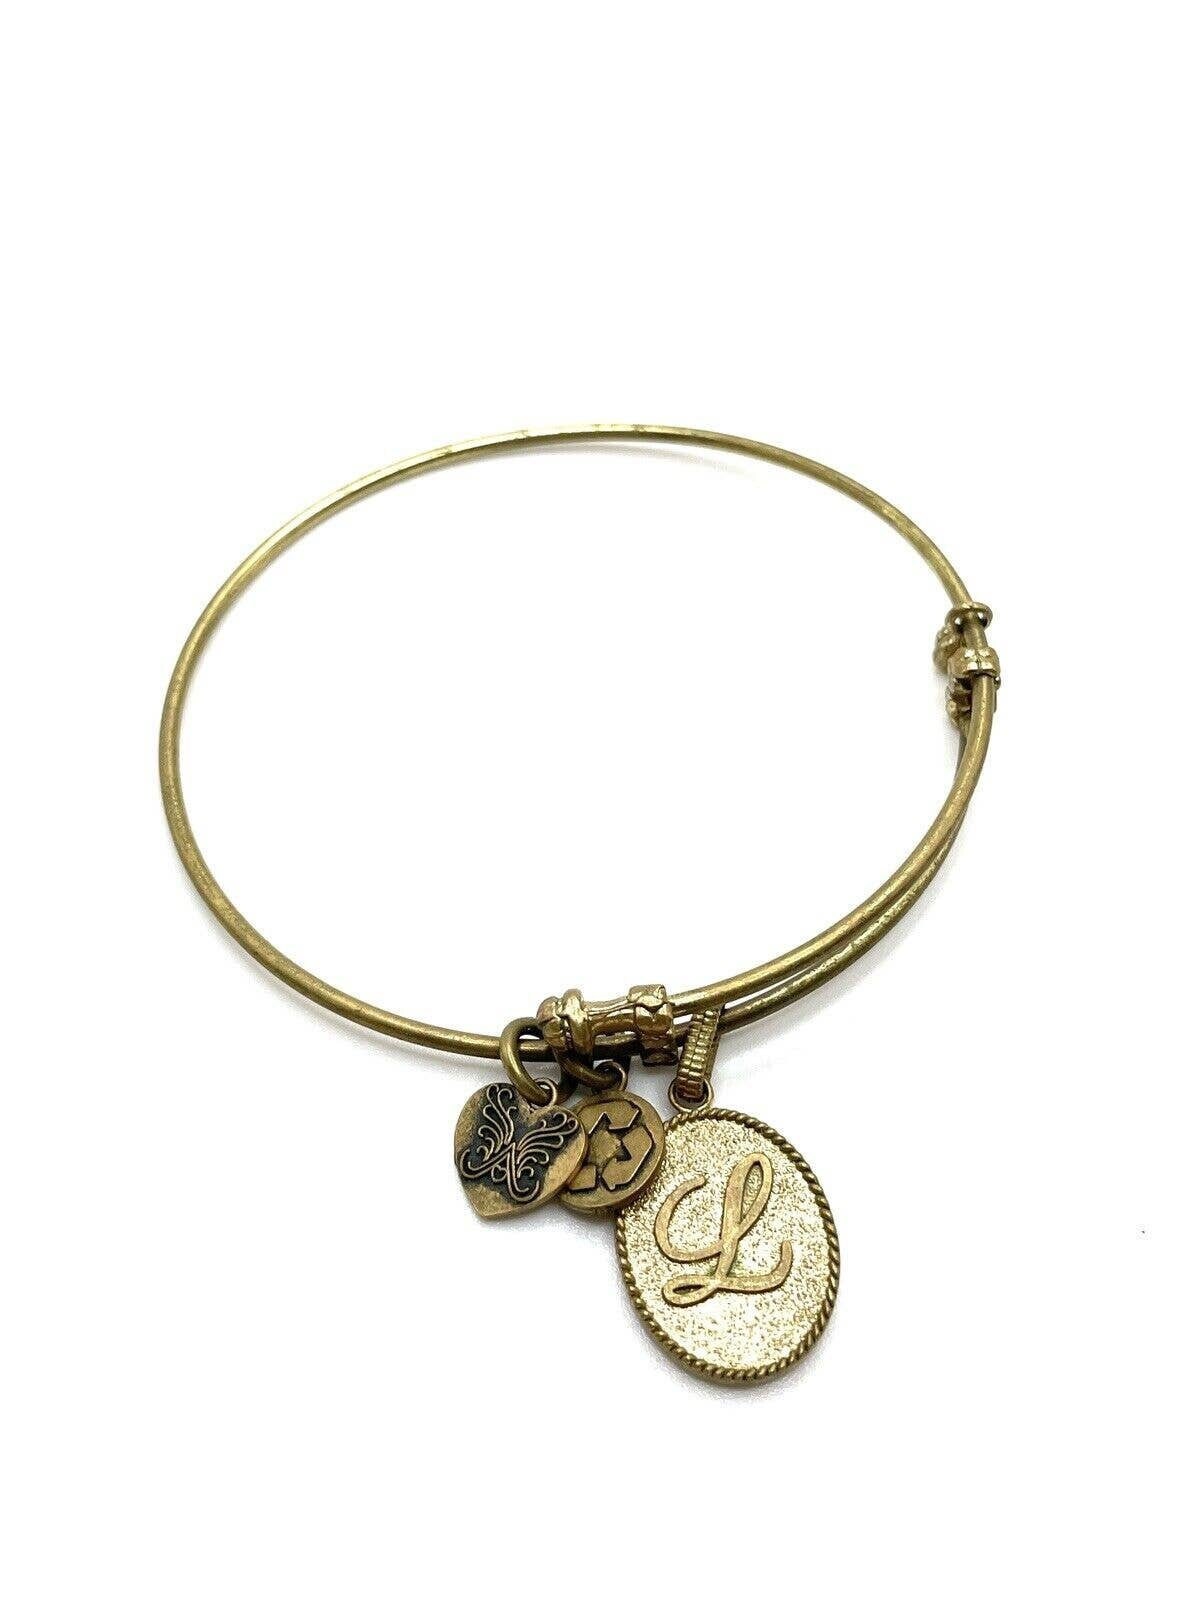 QWKLNRA Girls' Bracelets,Initial U Letters Zircon Bracelet Bangle for Women  Fashion Jewelry Gold Sta…See more QWKLNRA Girls' Bracelets,Initial U